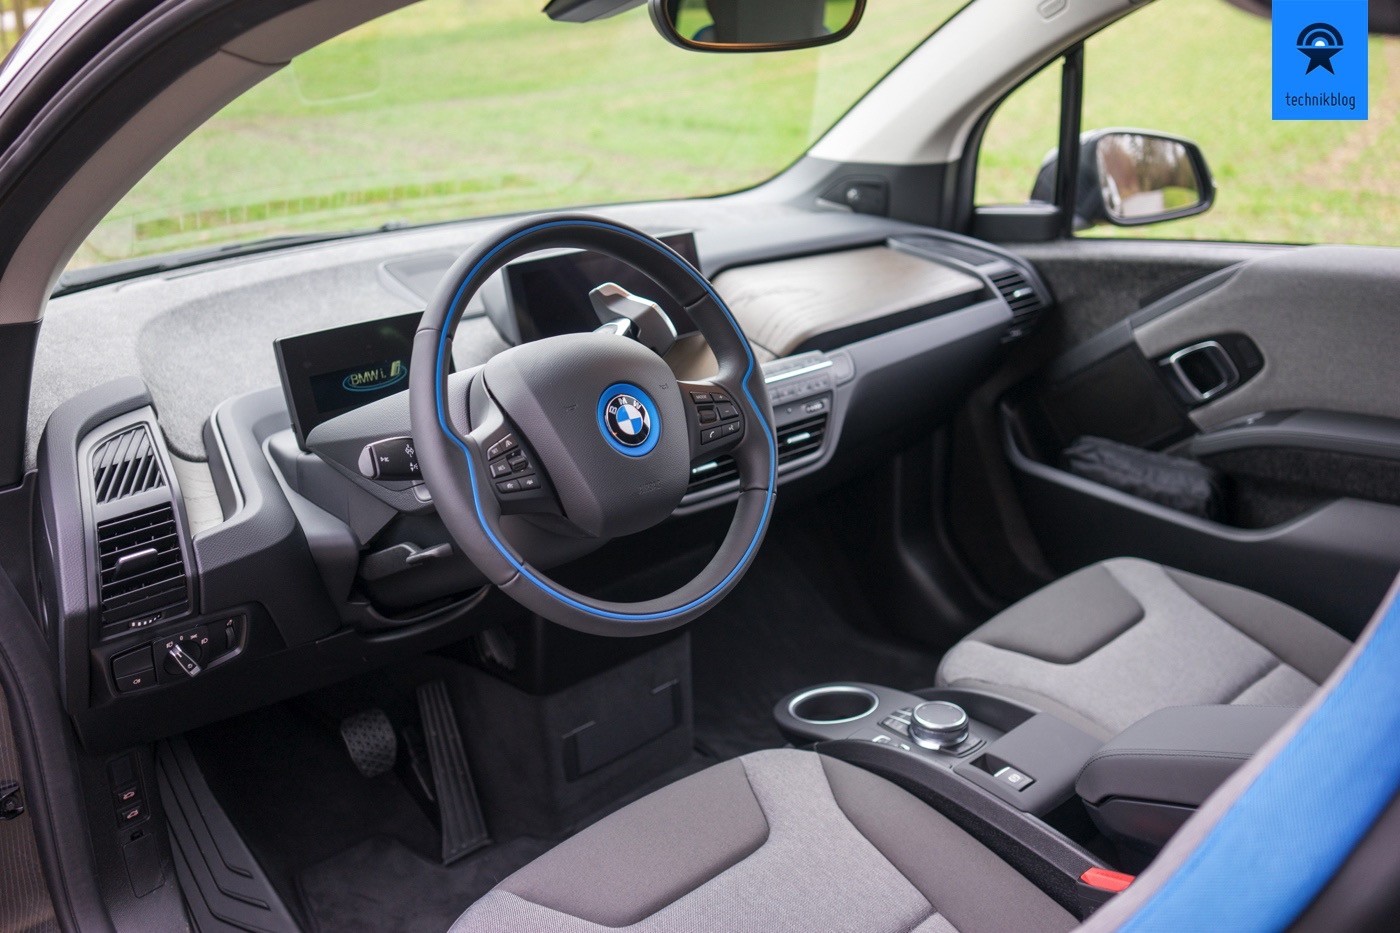 BMW i3 Cockpit